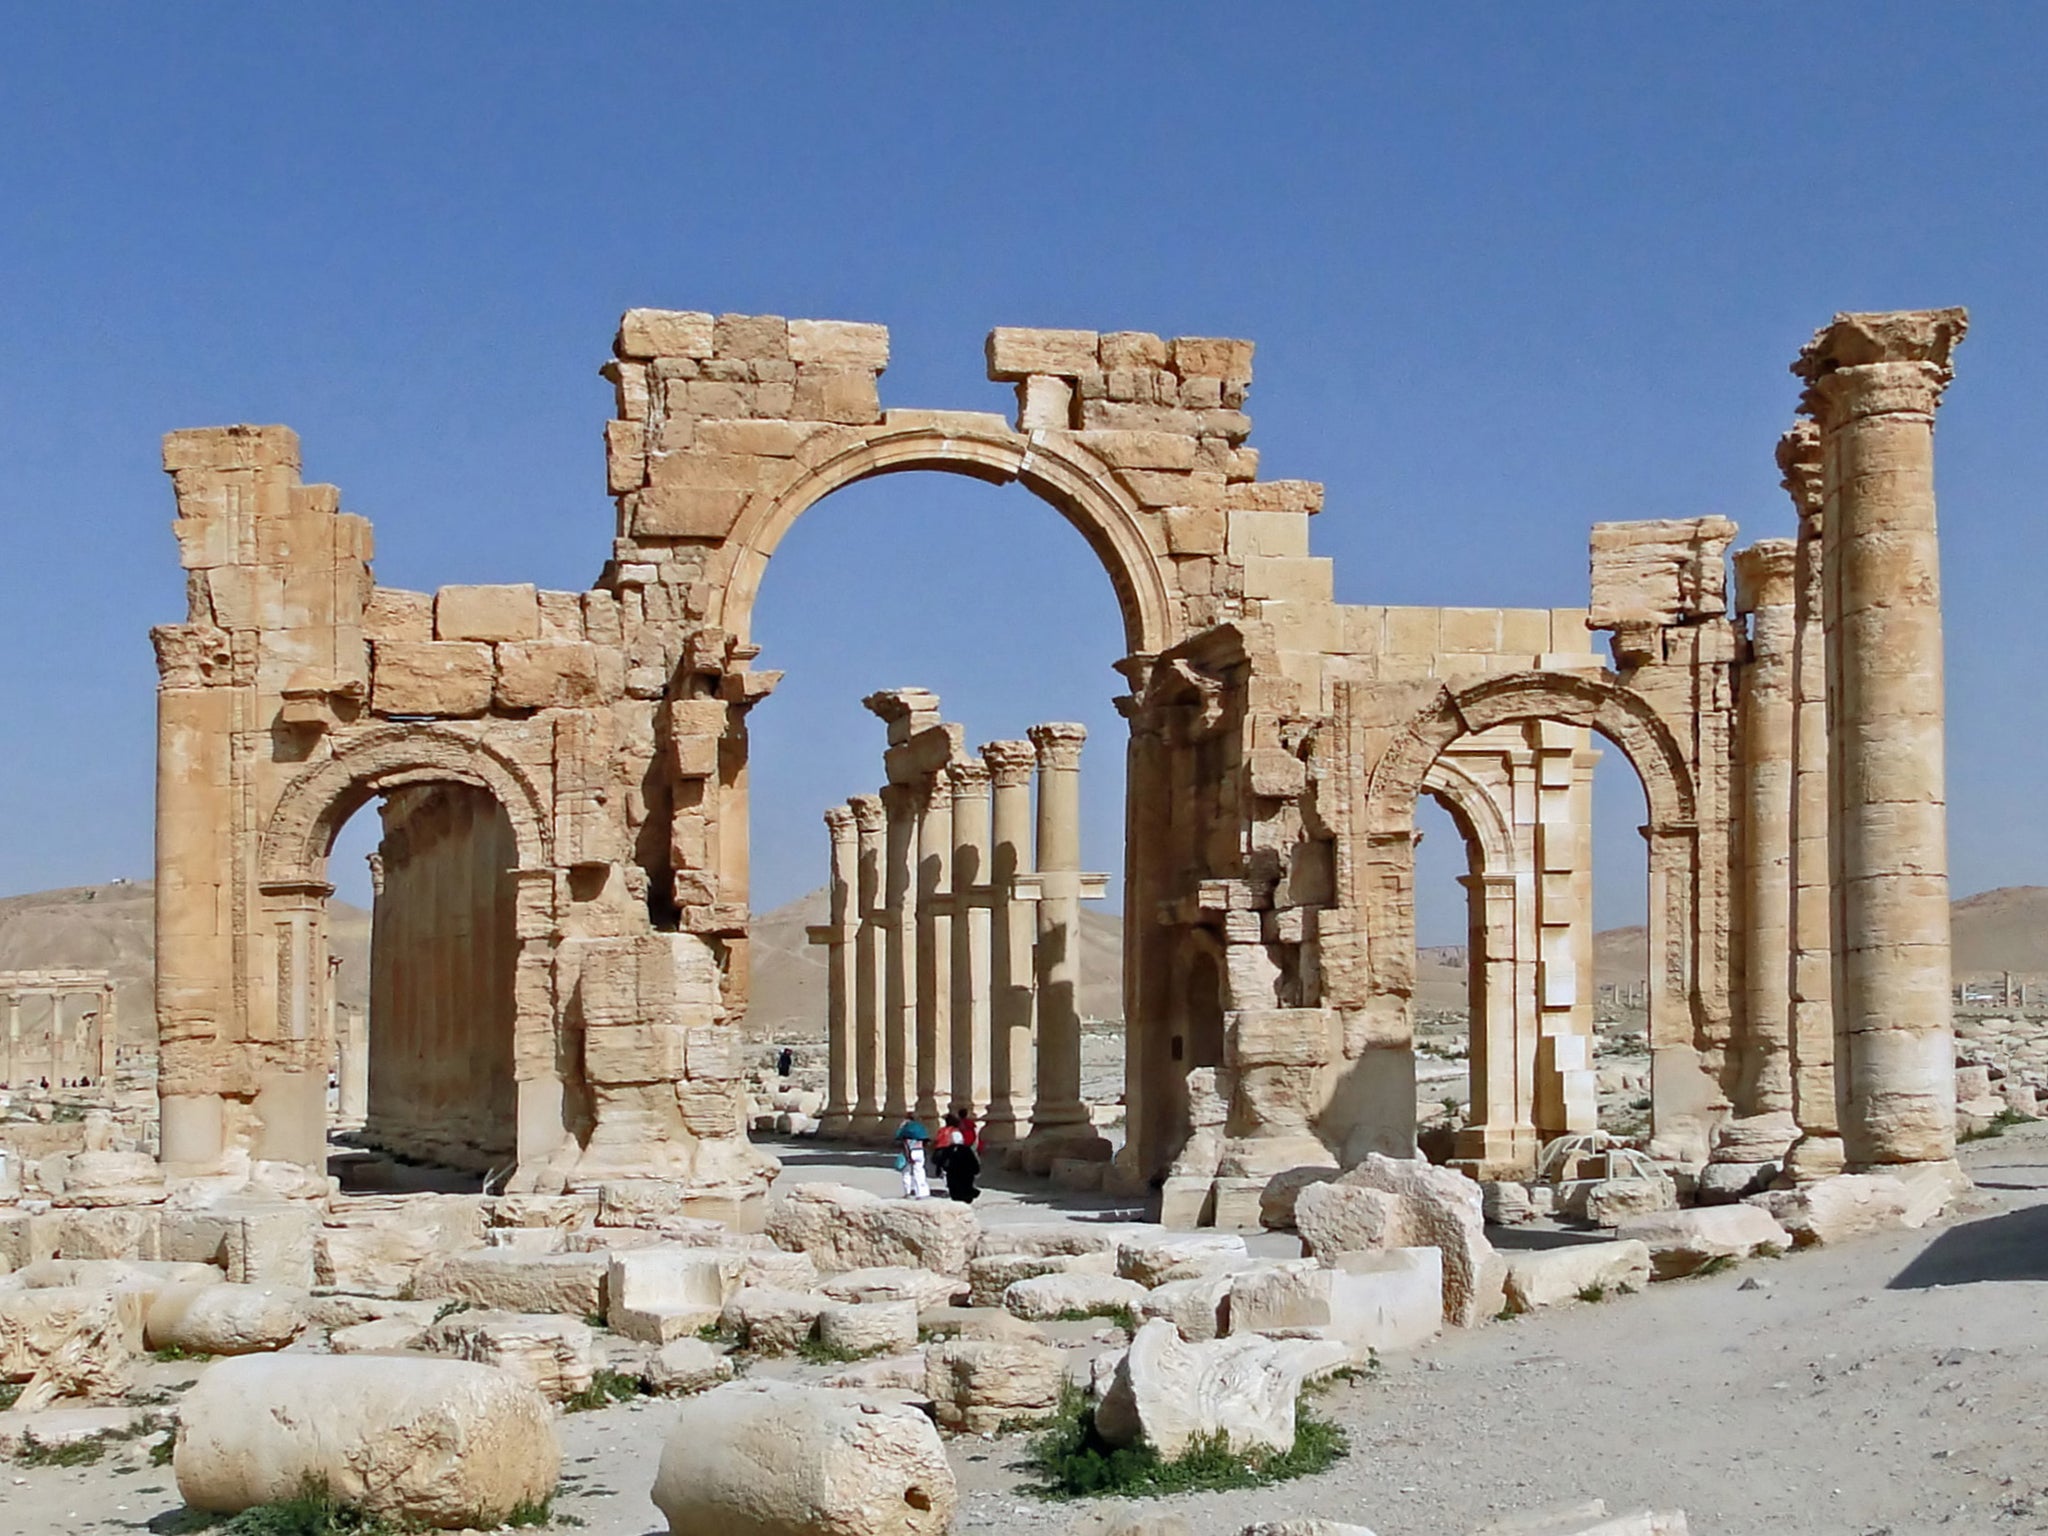 Palmyra's historic monumental arch.